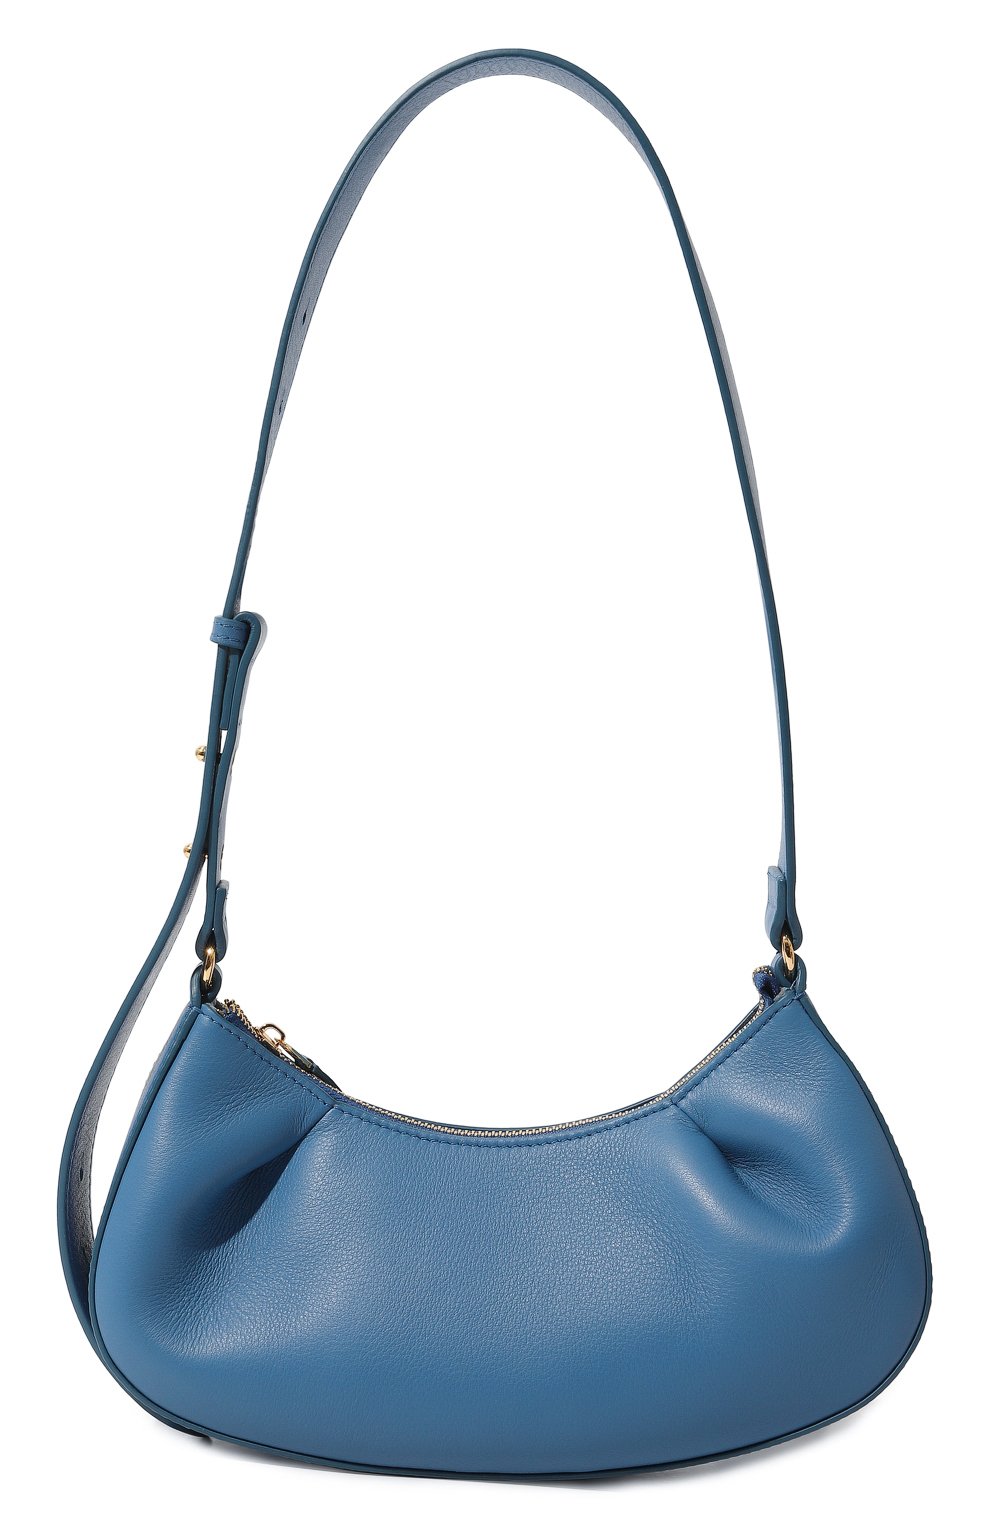 Женская сумка dimple moon small ELLEME голубого цвета, арт. DIMPLE M00N SMALL/LEATHER | Фото 1 (Сумки-технические: Сумки top-handle; Материал: Натуральная кожа; Размер: small)